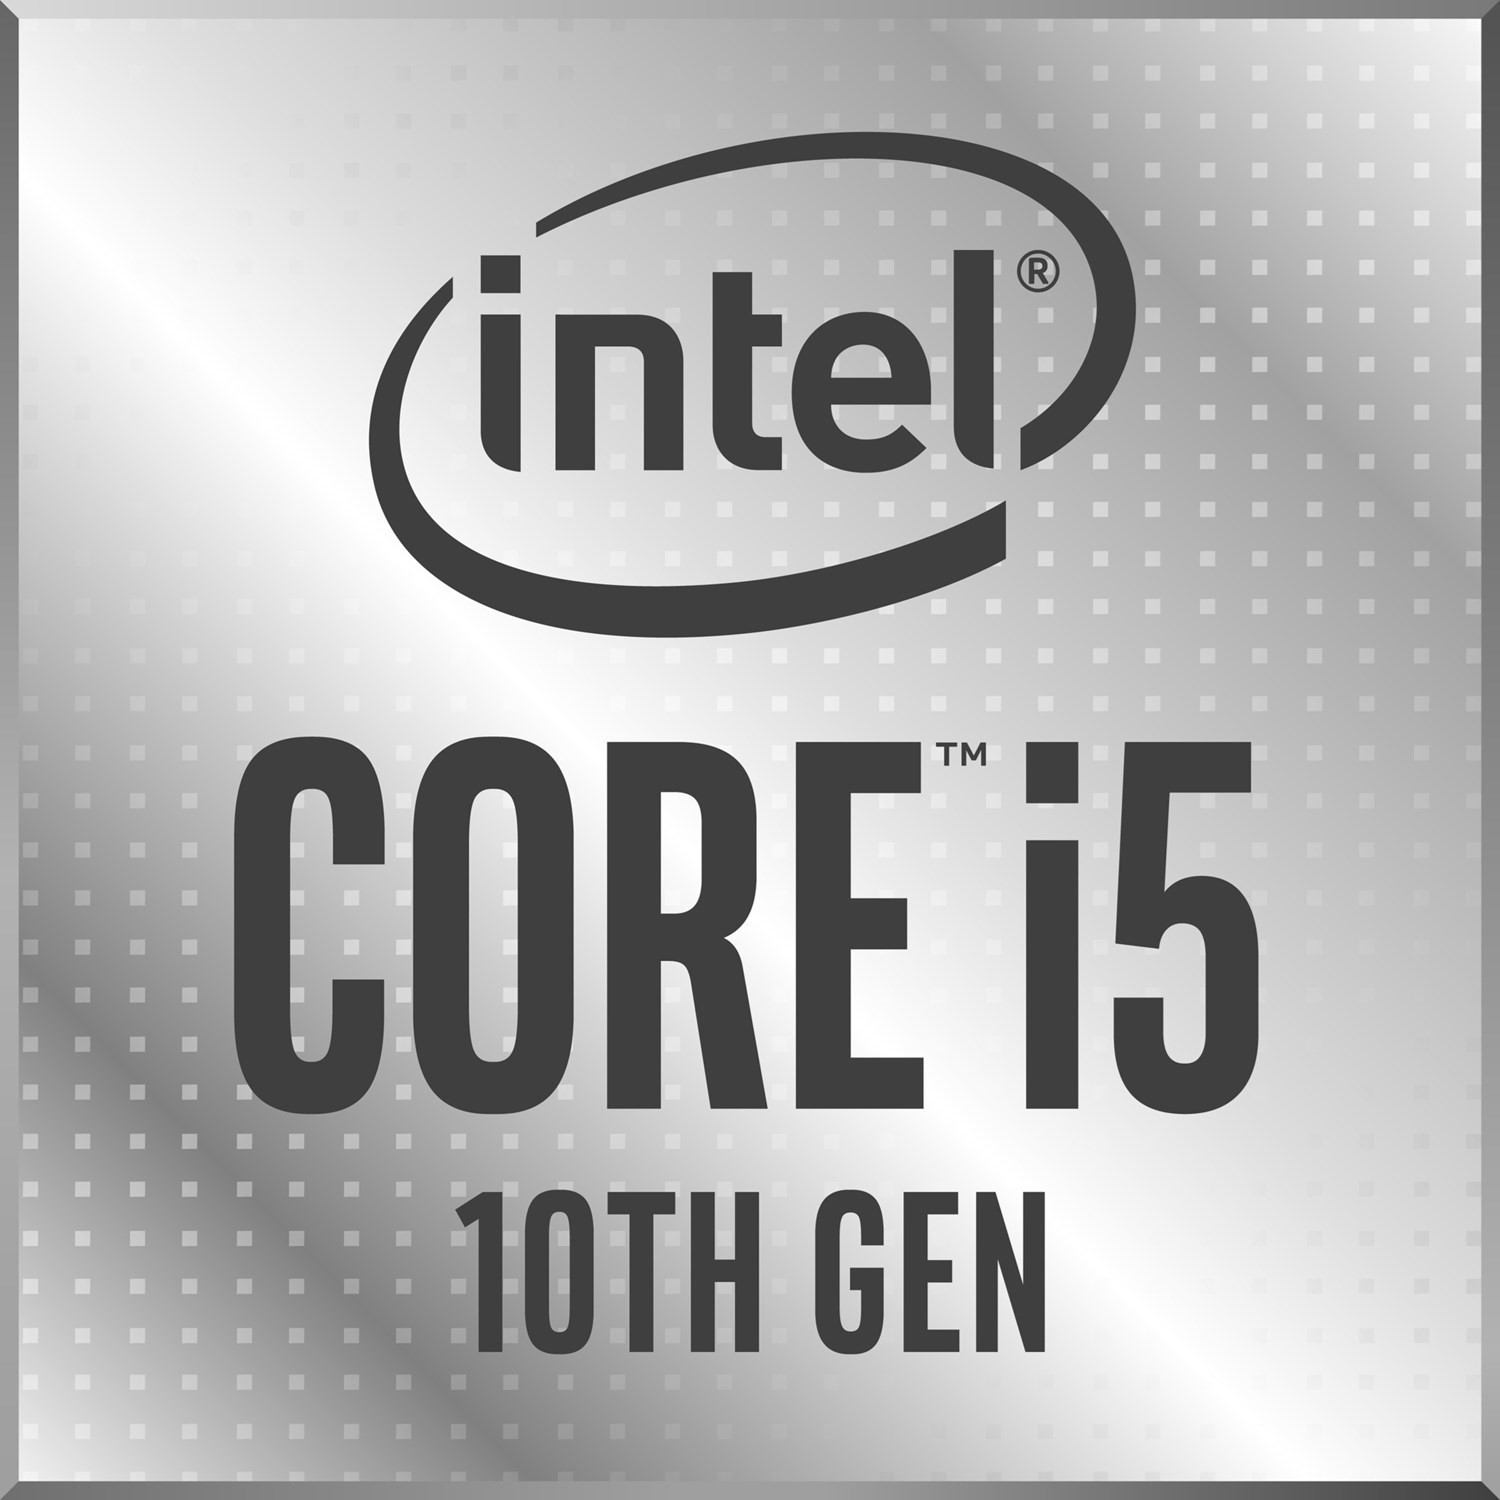 Intel Core i5 10600KF